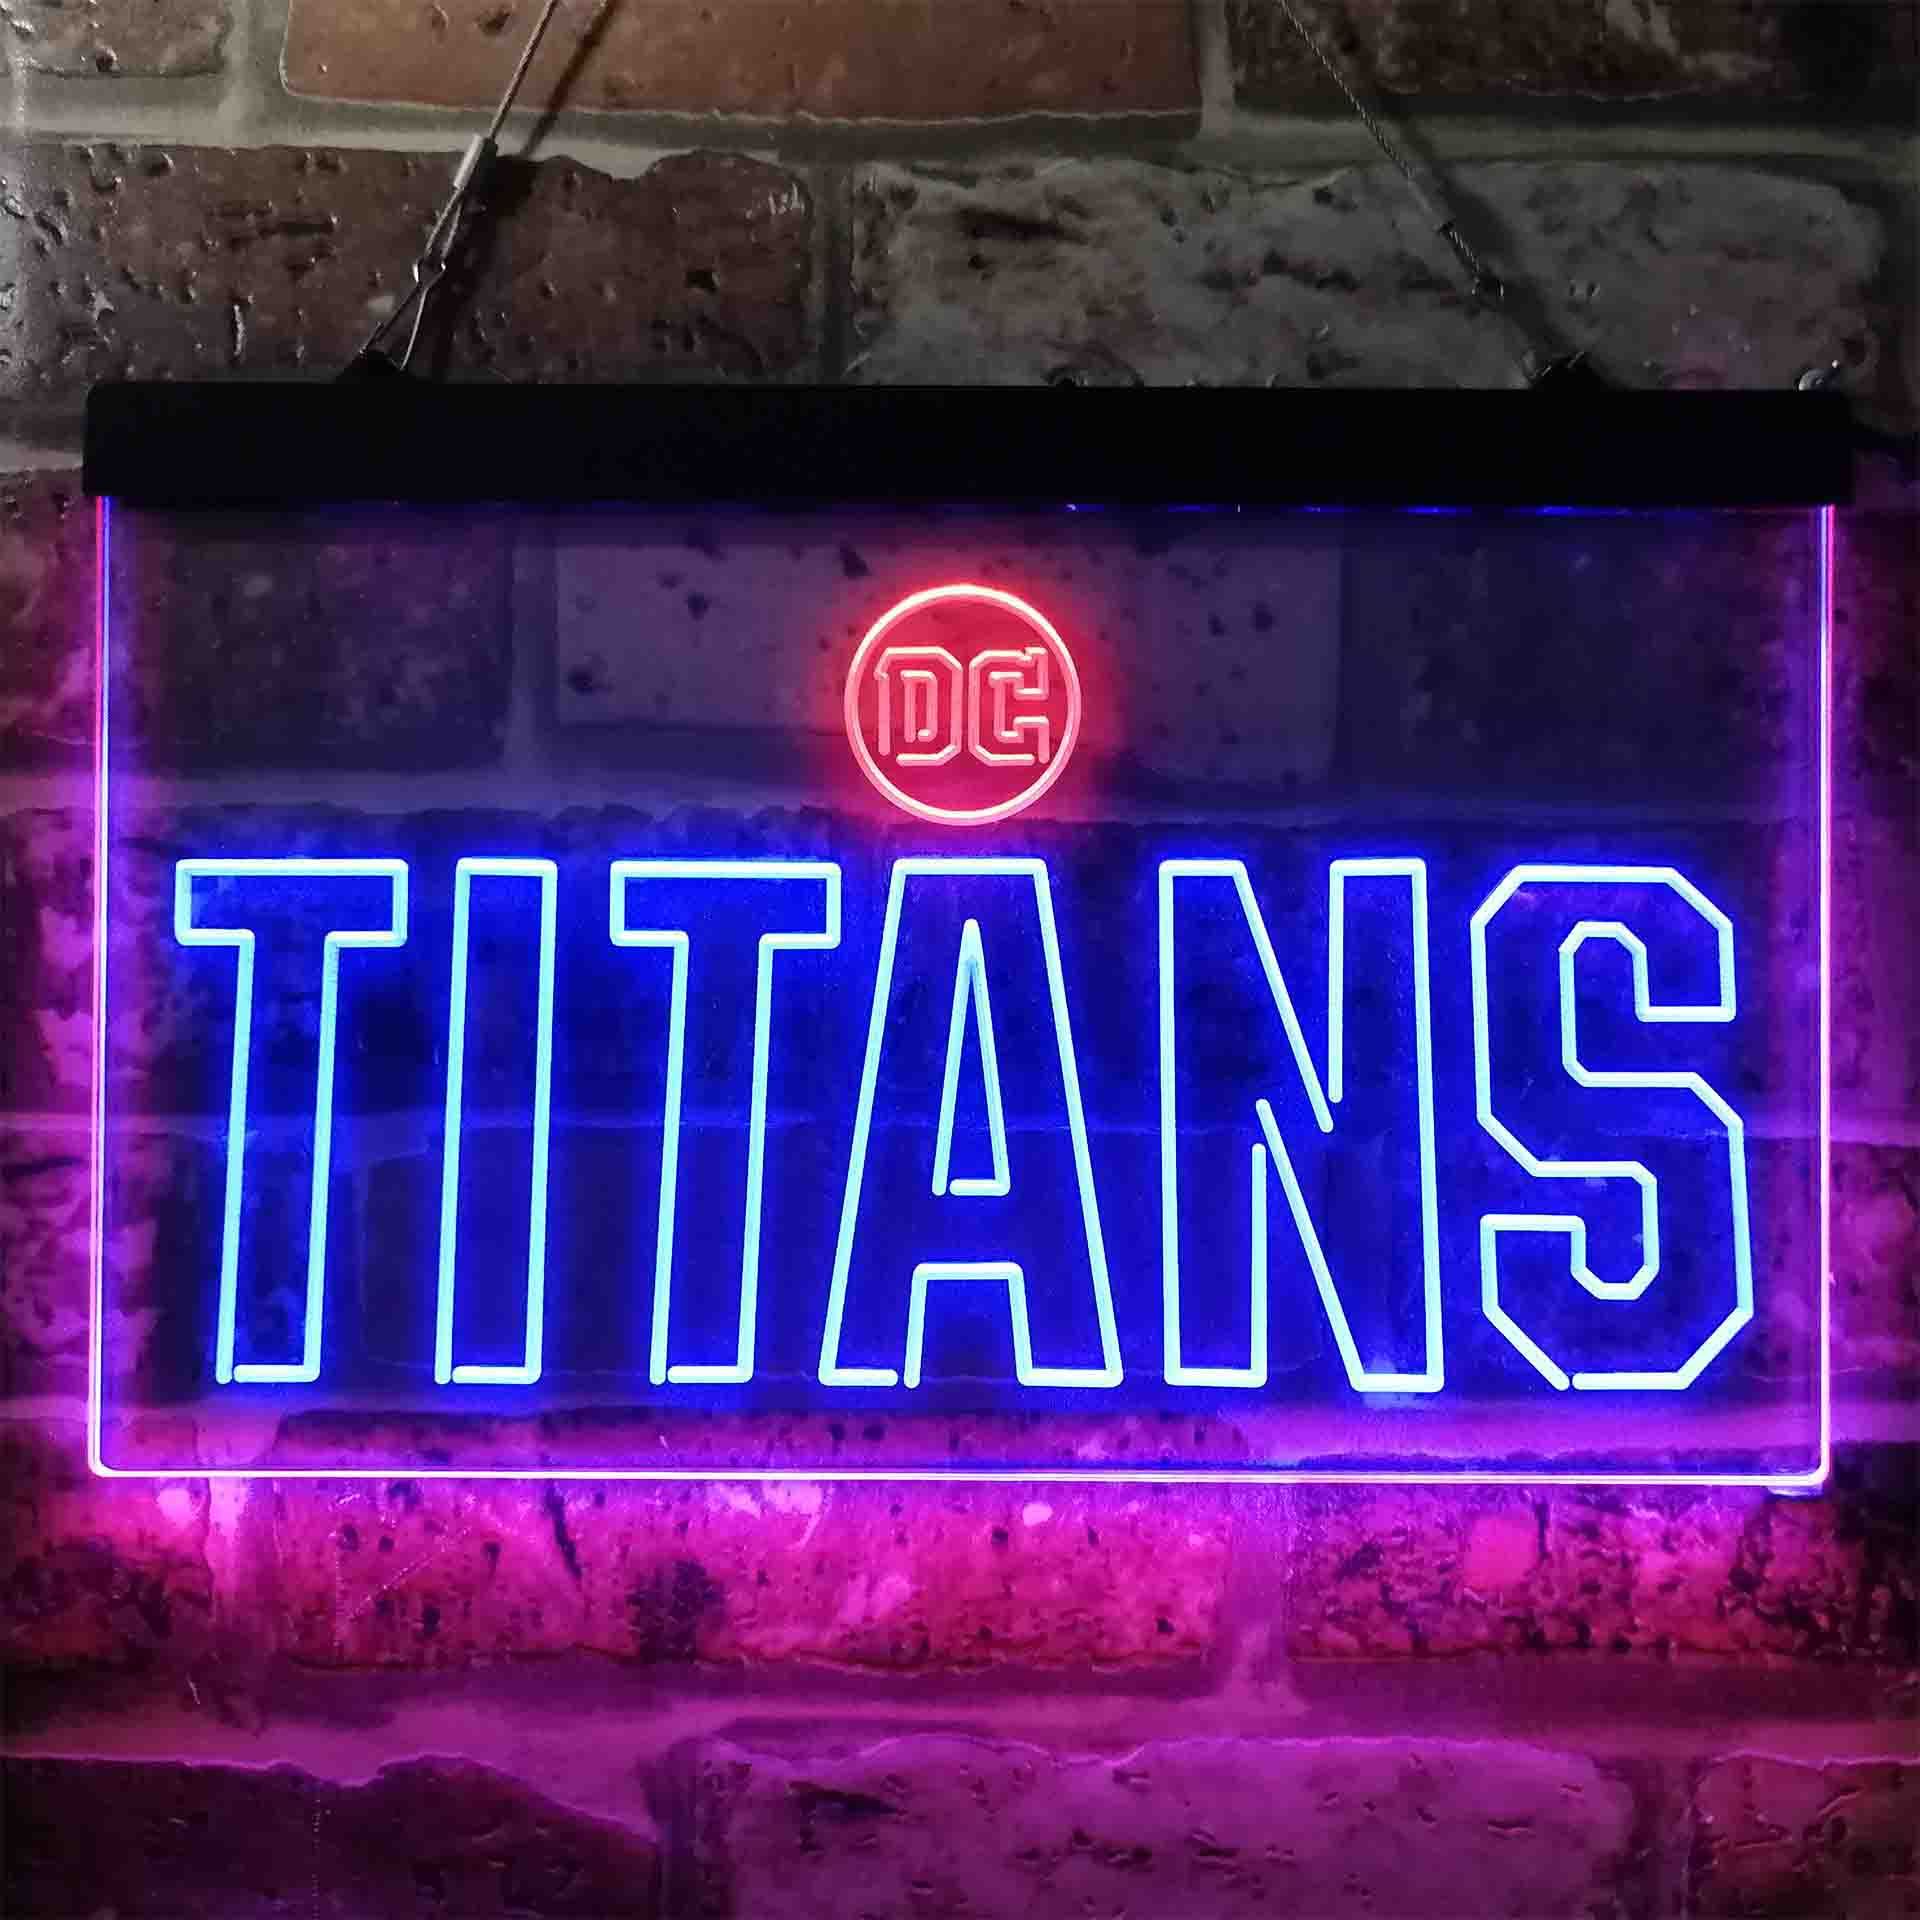 Titans DC Dual LED Neon Light Sign